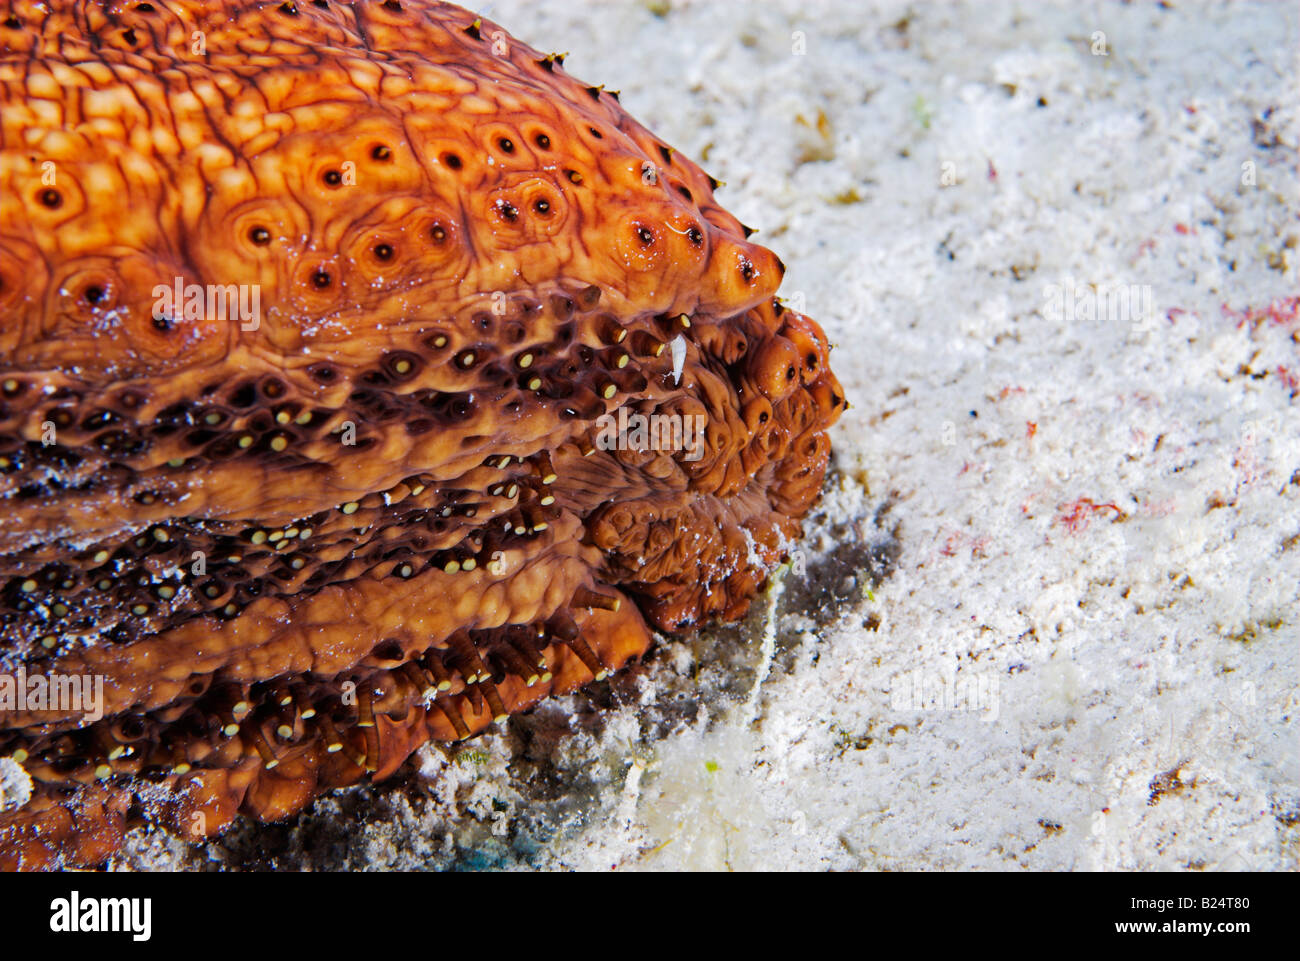 Closeup underside with tube feet and mouth 'sea cucumber' Actinopyga agassizii Bahamas Stock Photo